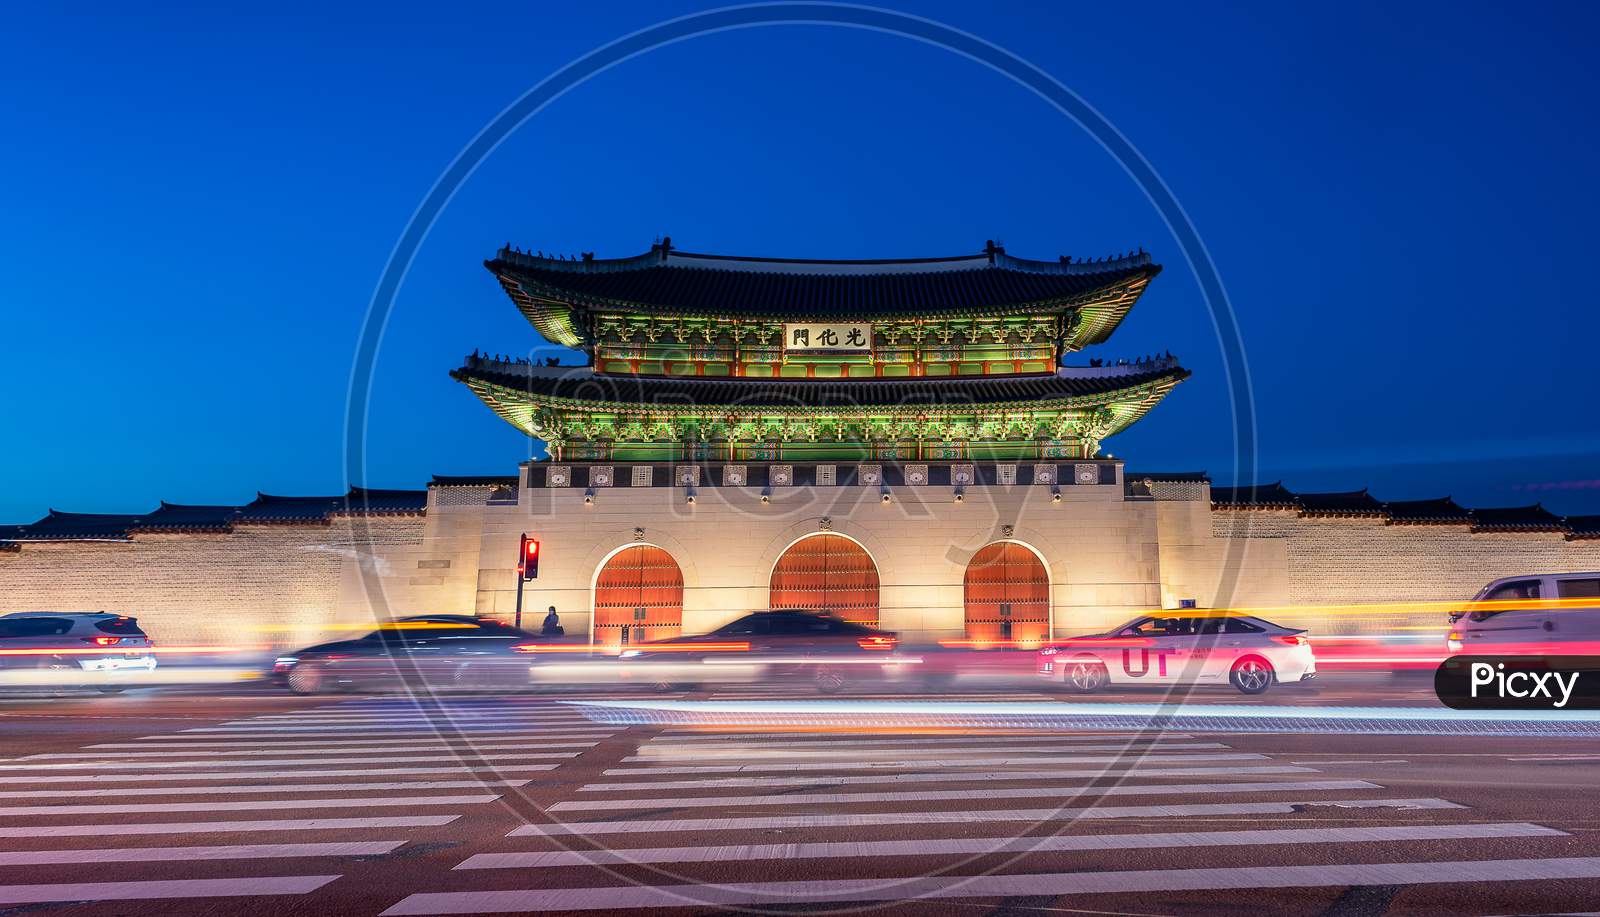 Gwanghwamun Gate Of Gyeongbokgung Palace Of The Joseon Dynasty In Seoul Korea